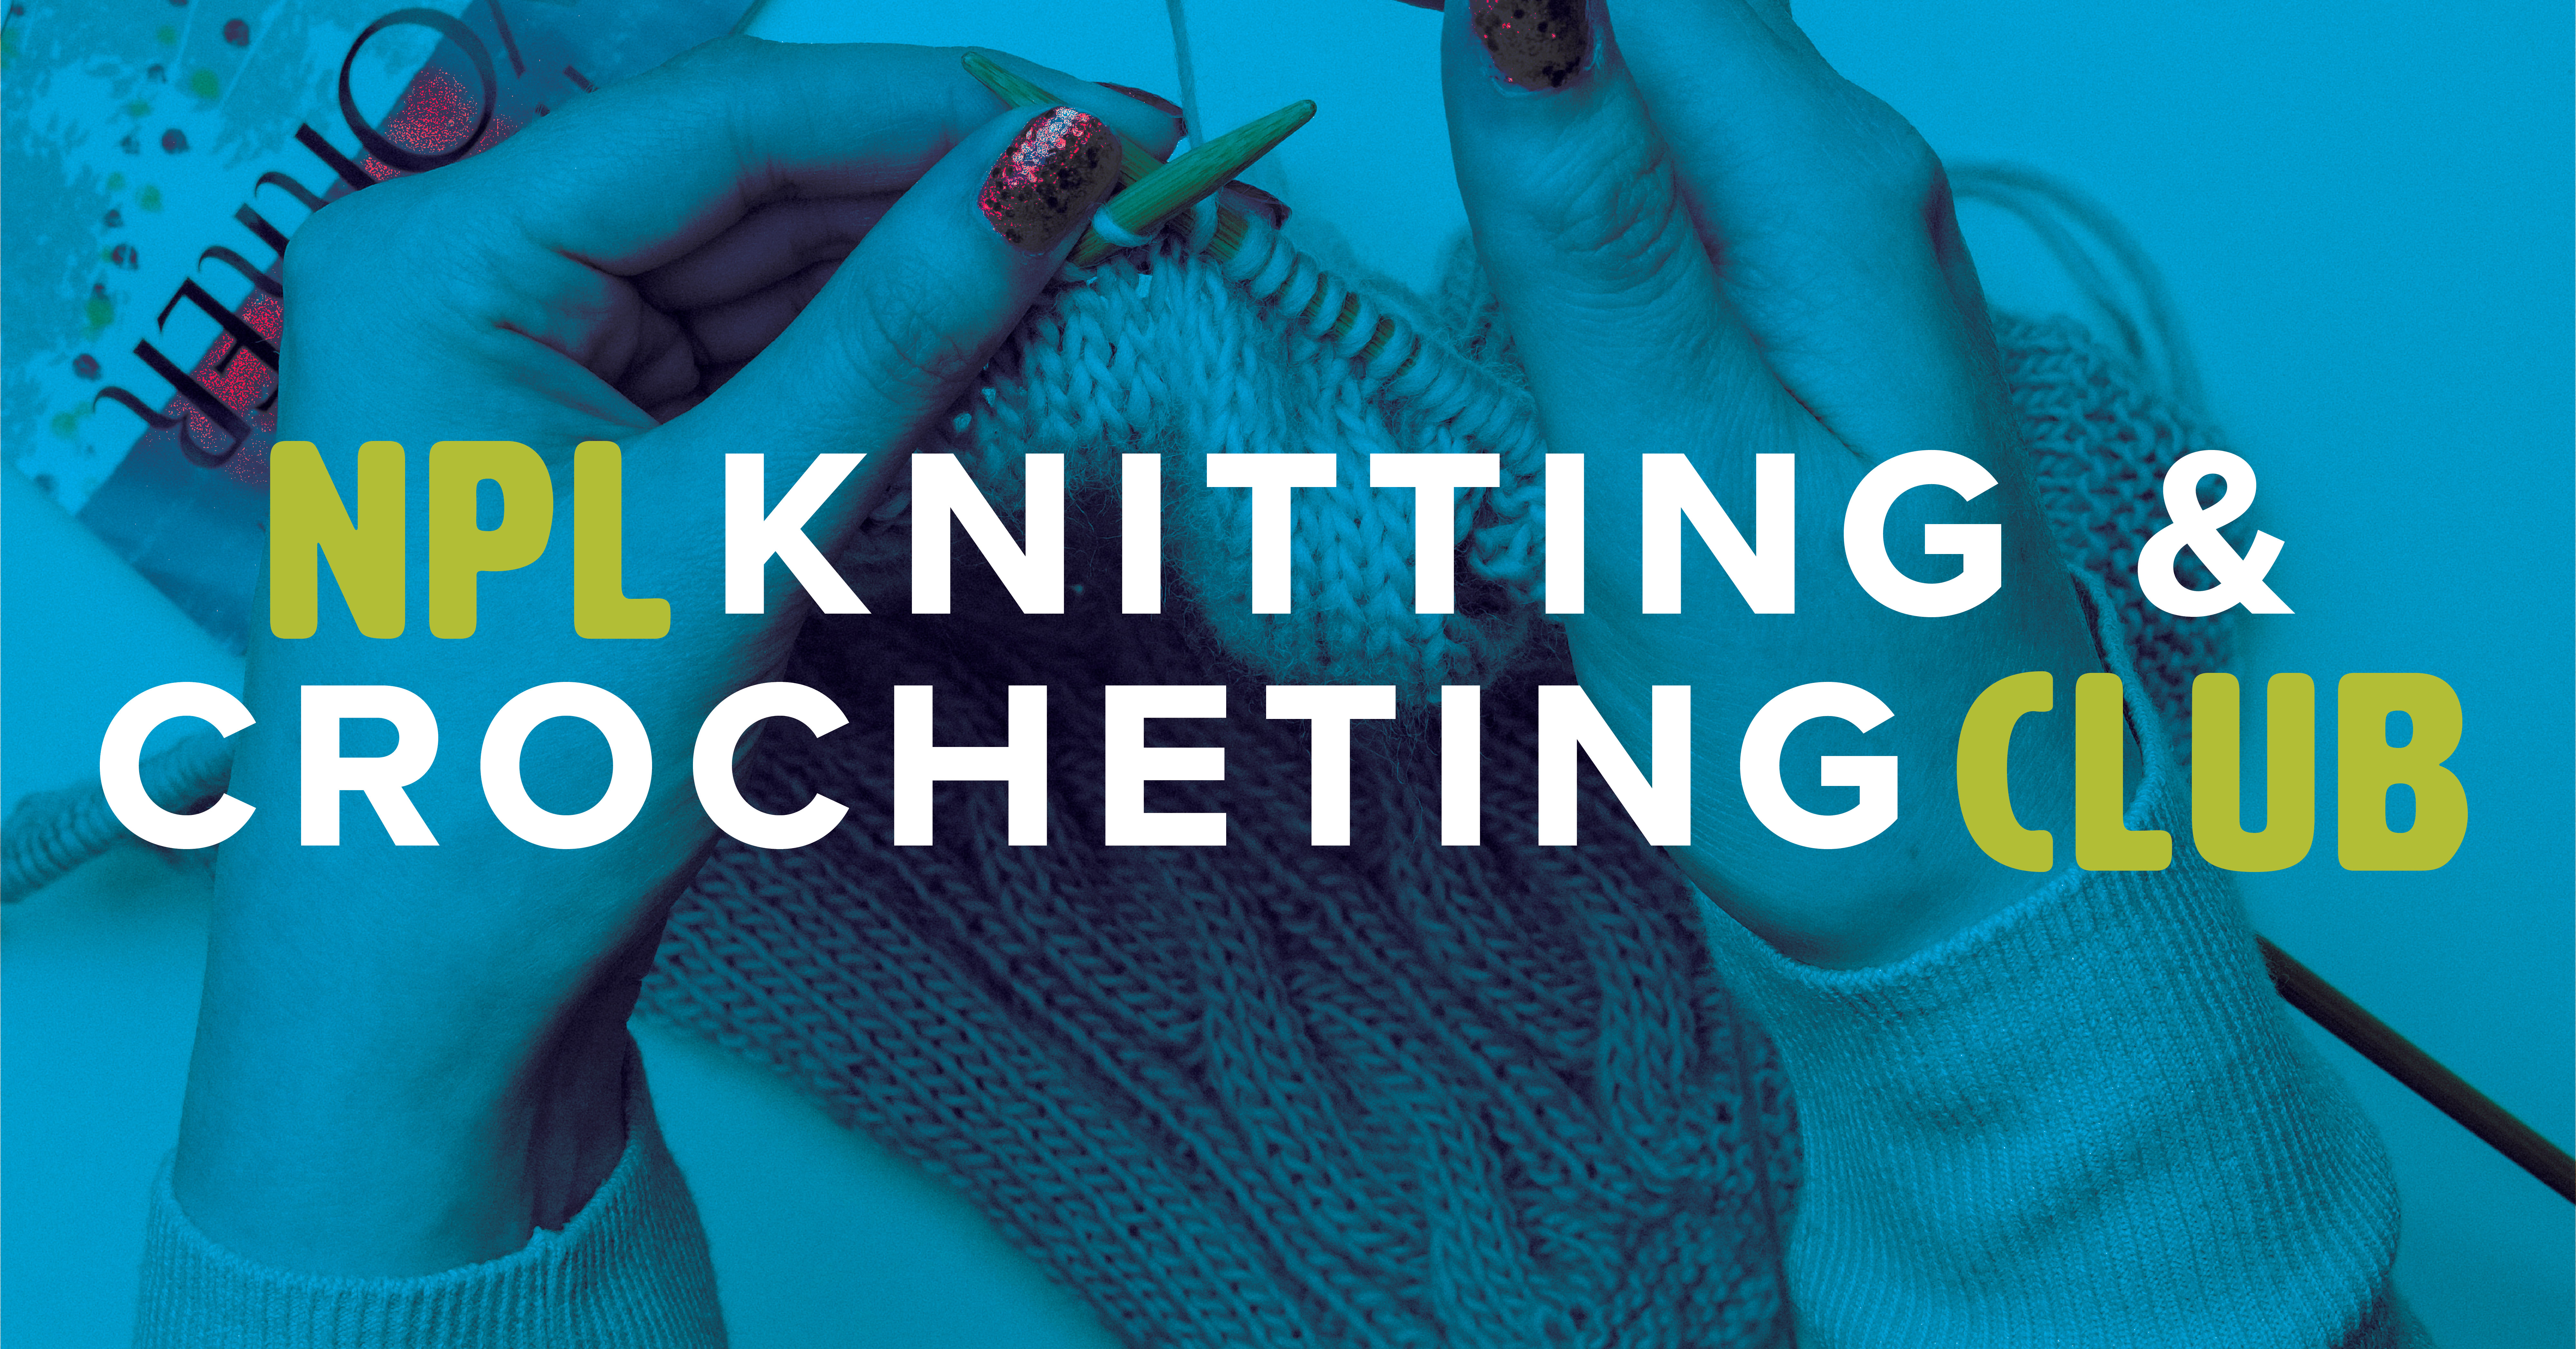 NPL Knitting & Crocheting Club